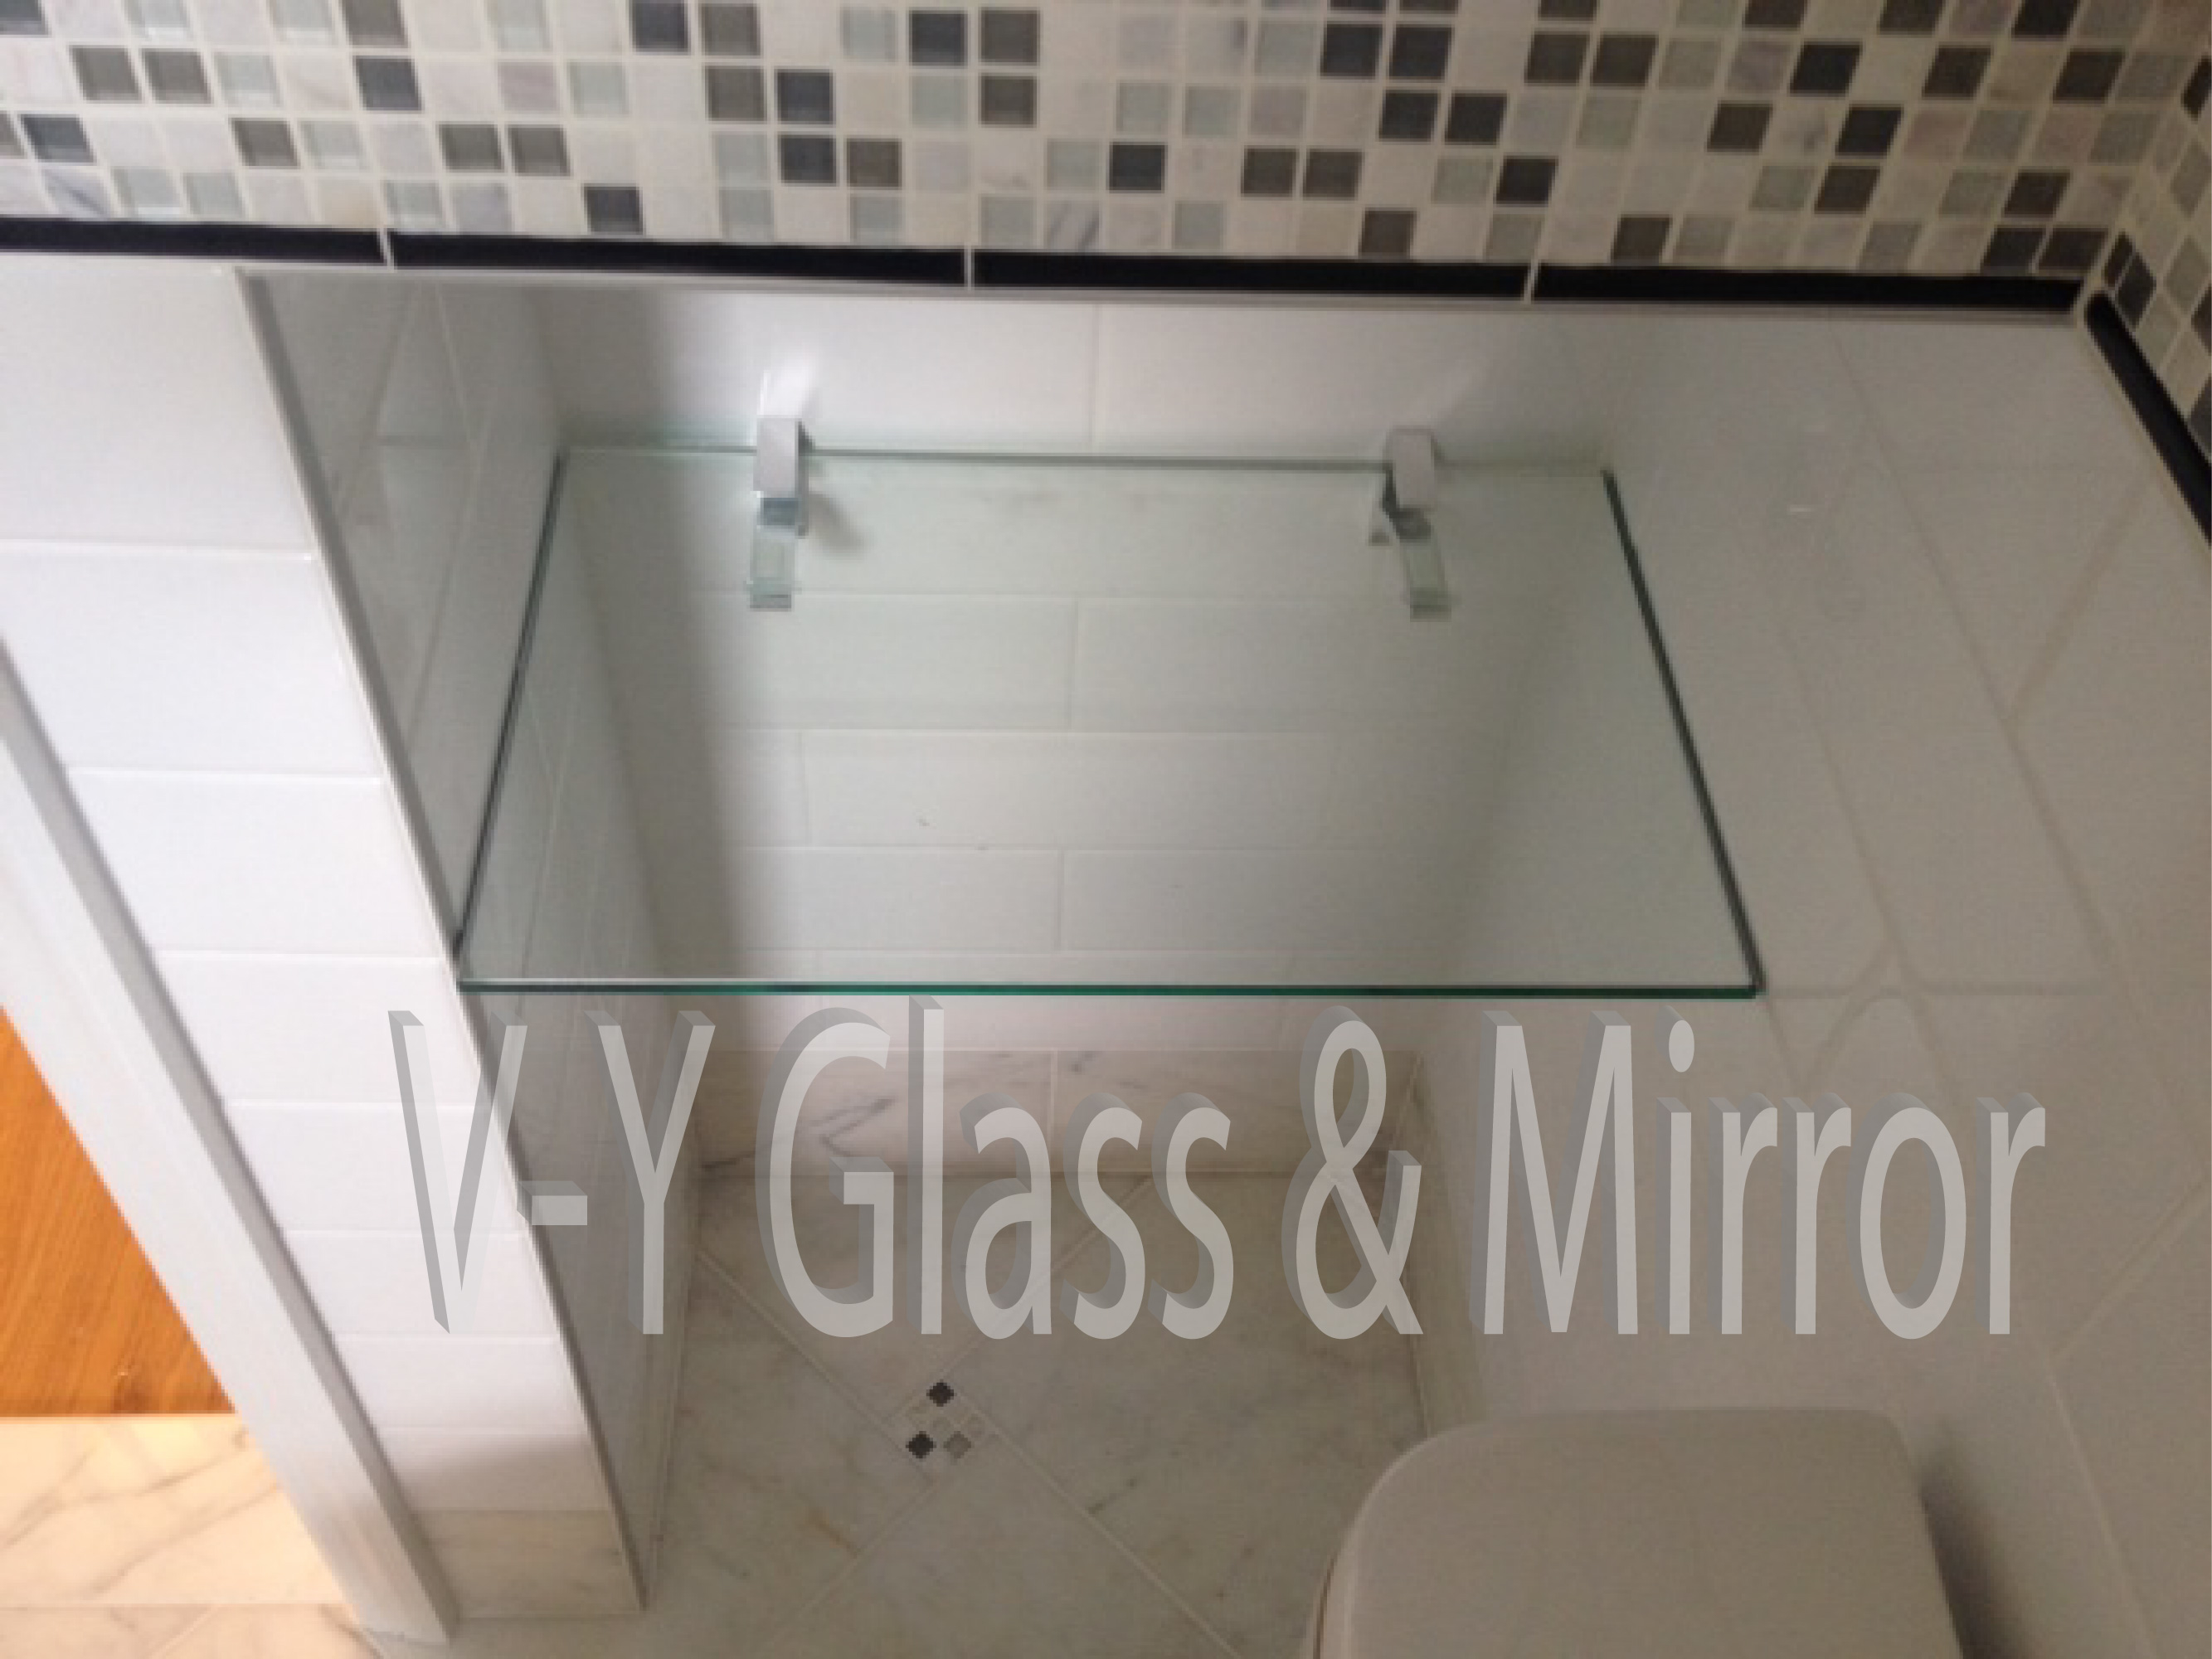 V-Y Glass & Mirror Services Inc. Photo